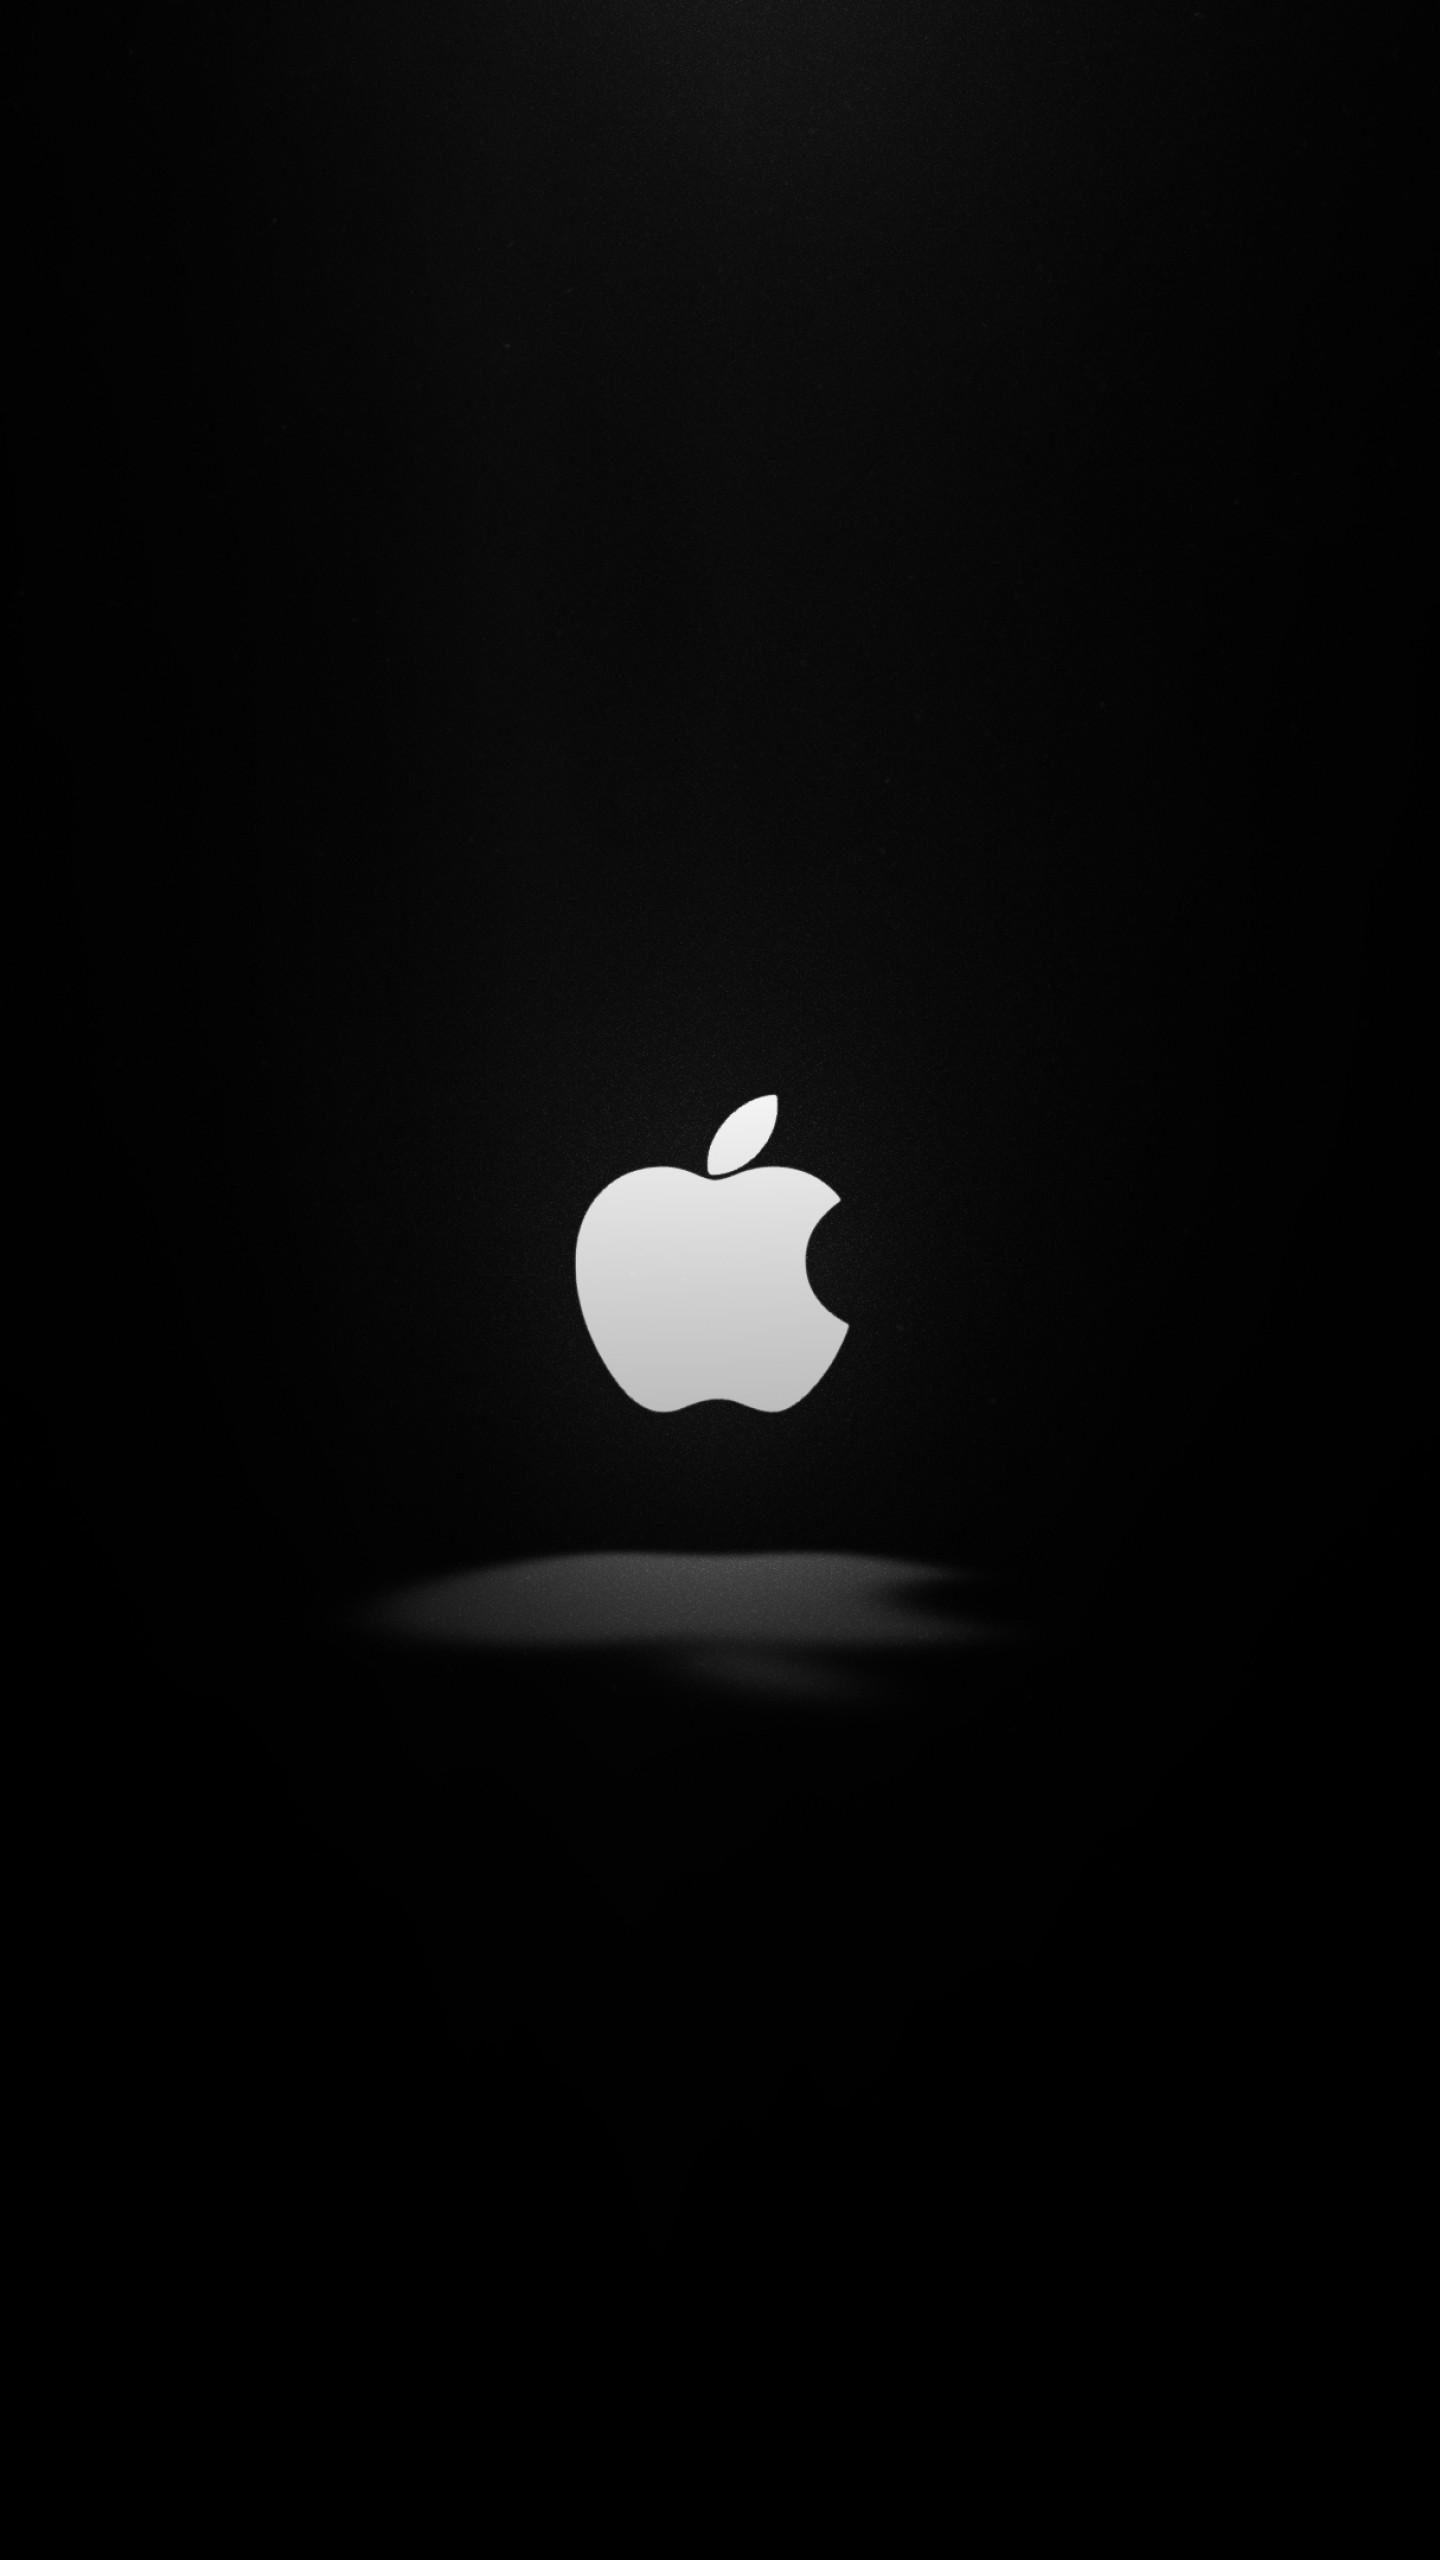 iPhone 4k Dark Wallpapers - Wallpaper Cave